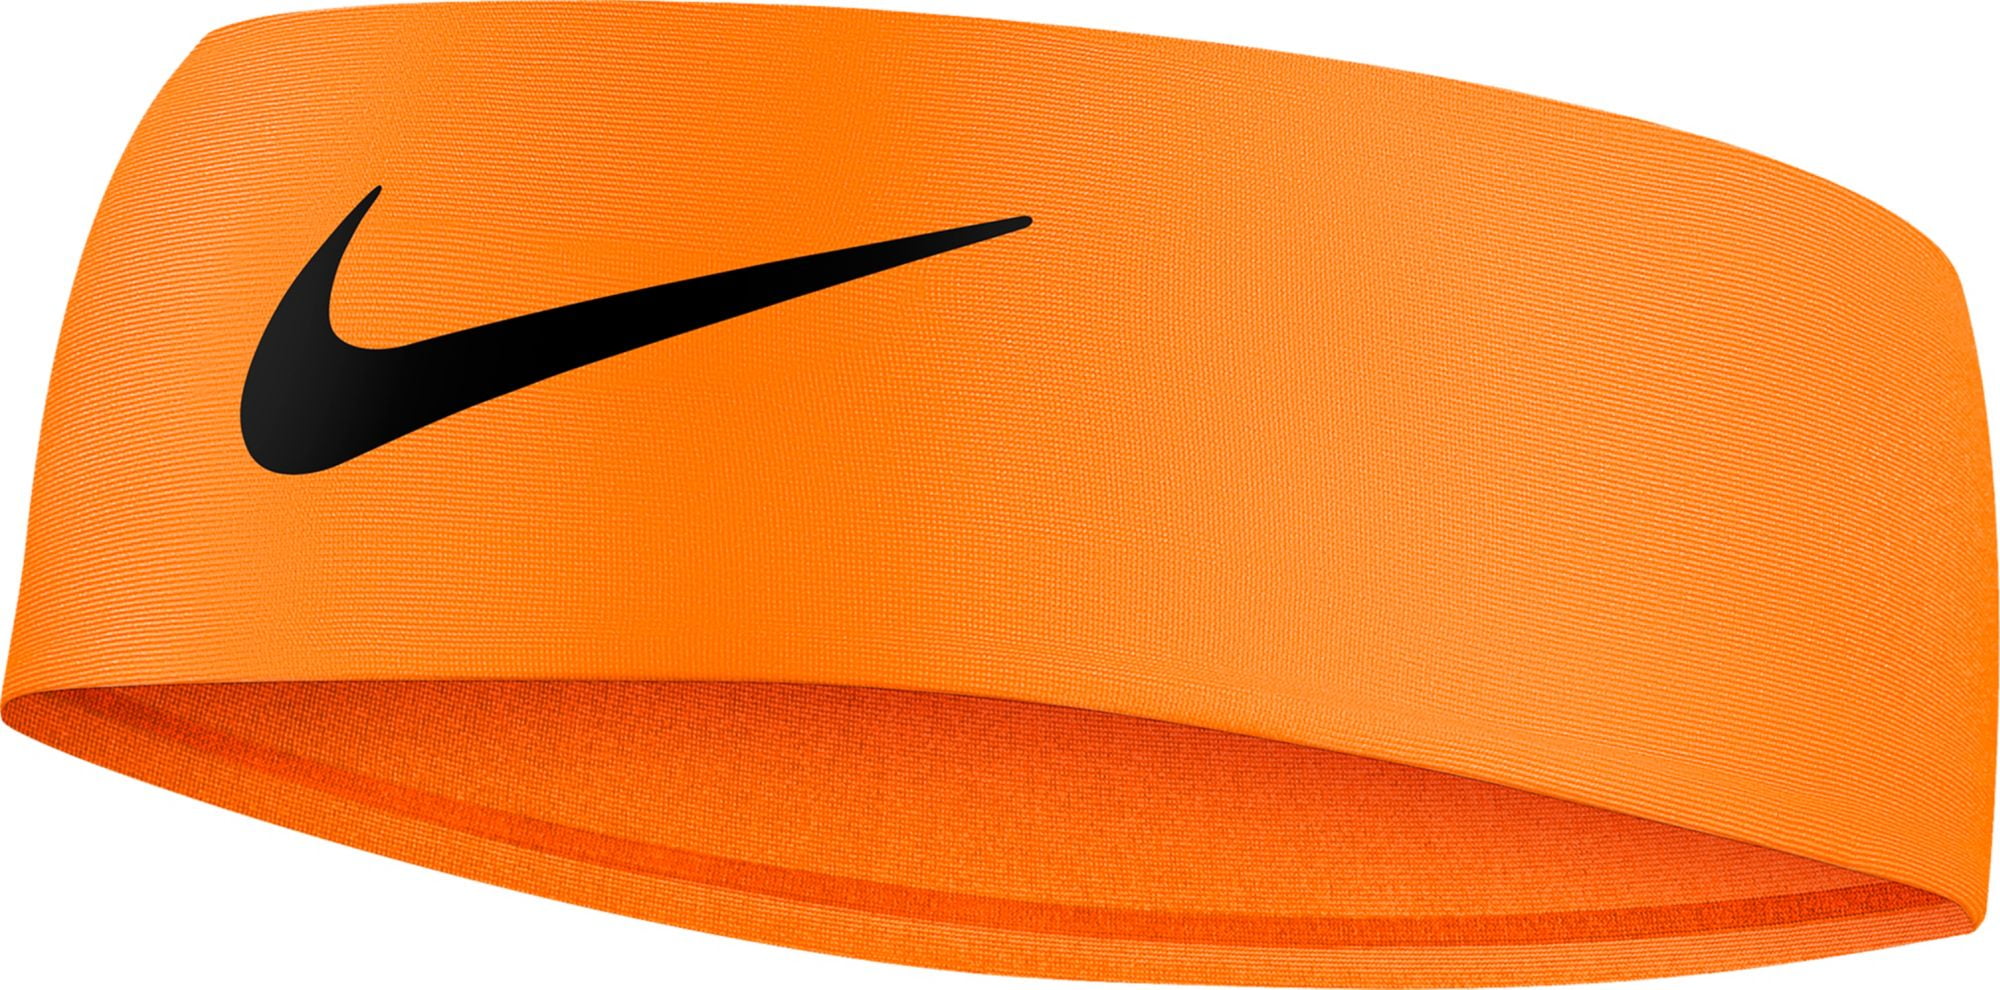 Bandeau Fury 2.0 by Nike - 24,95 €